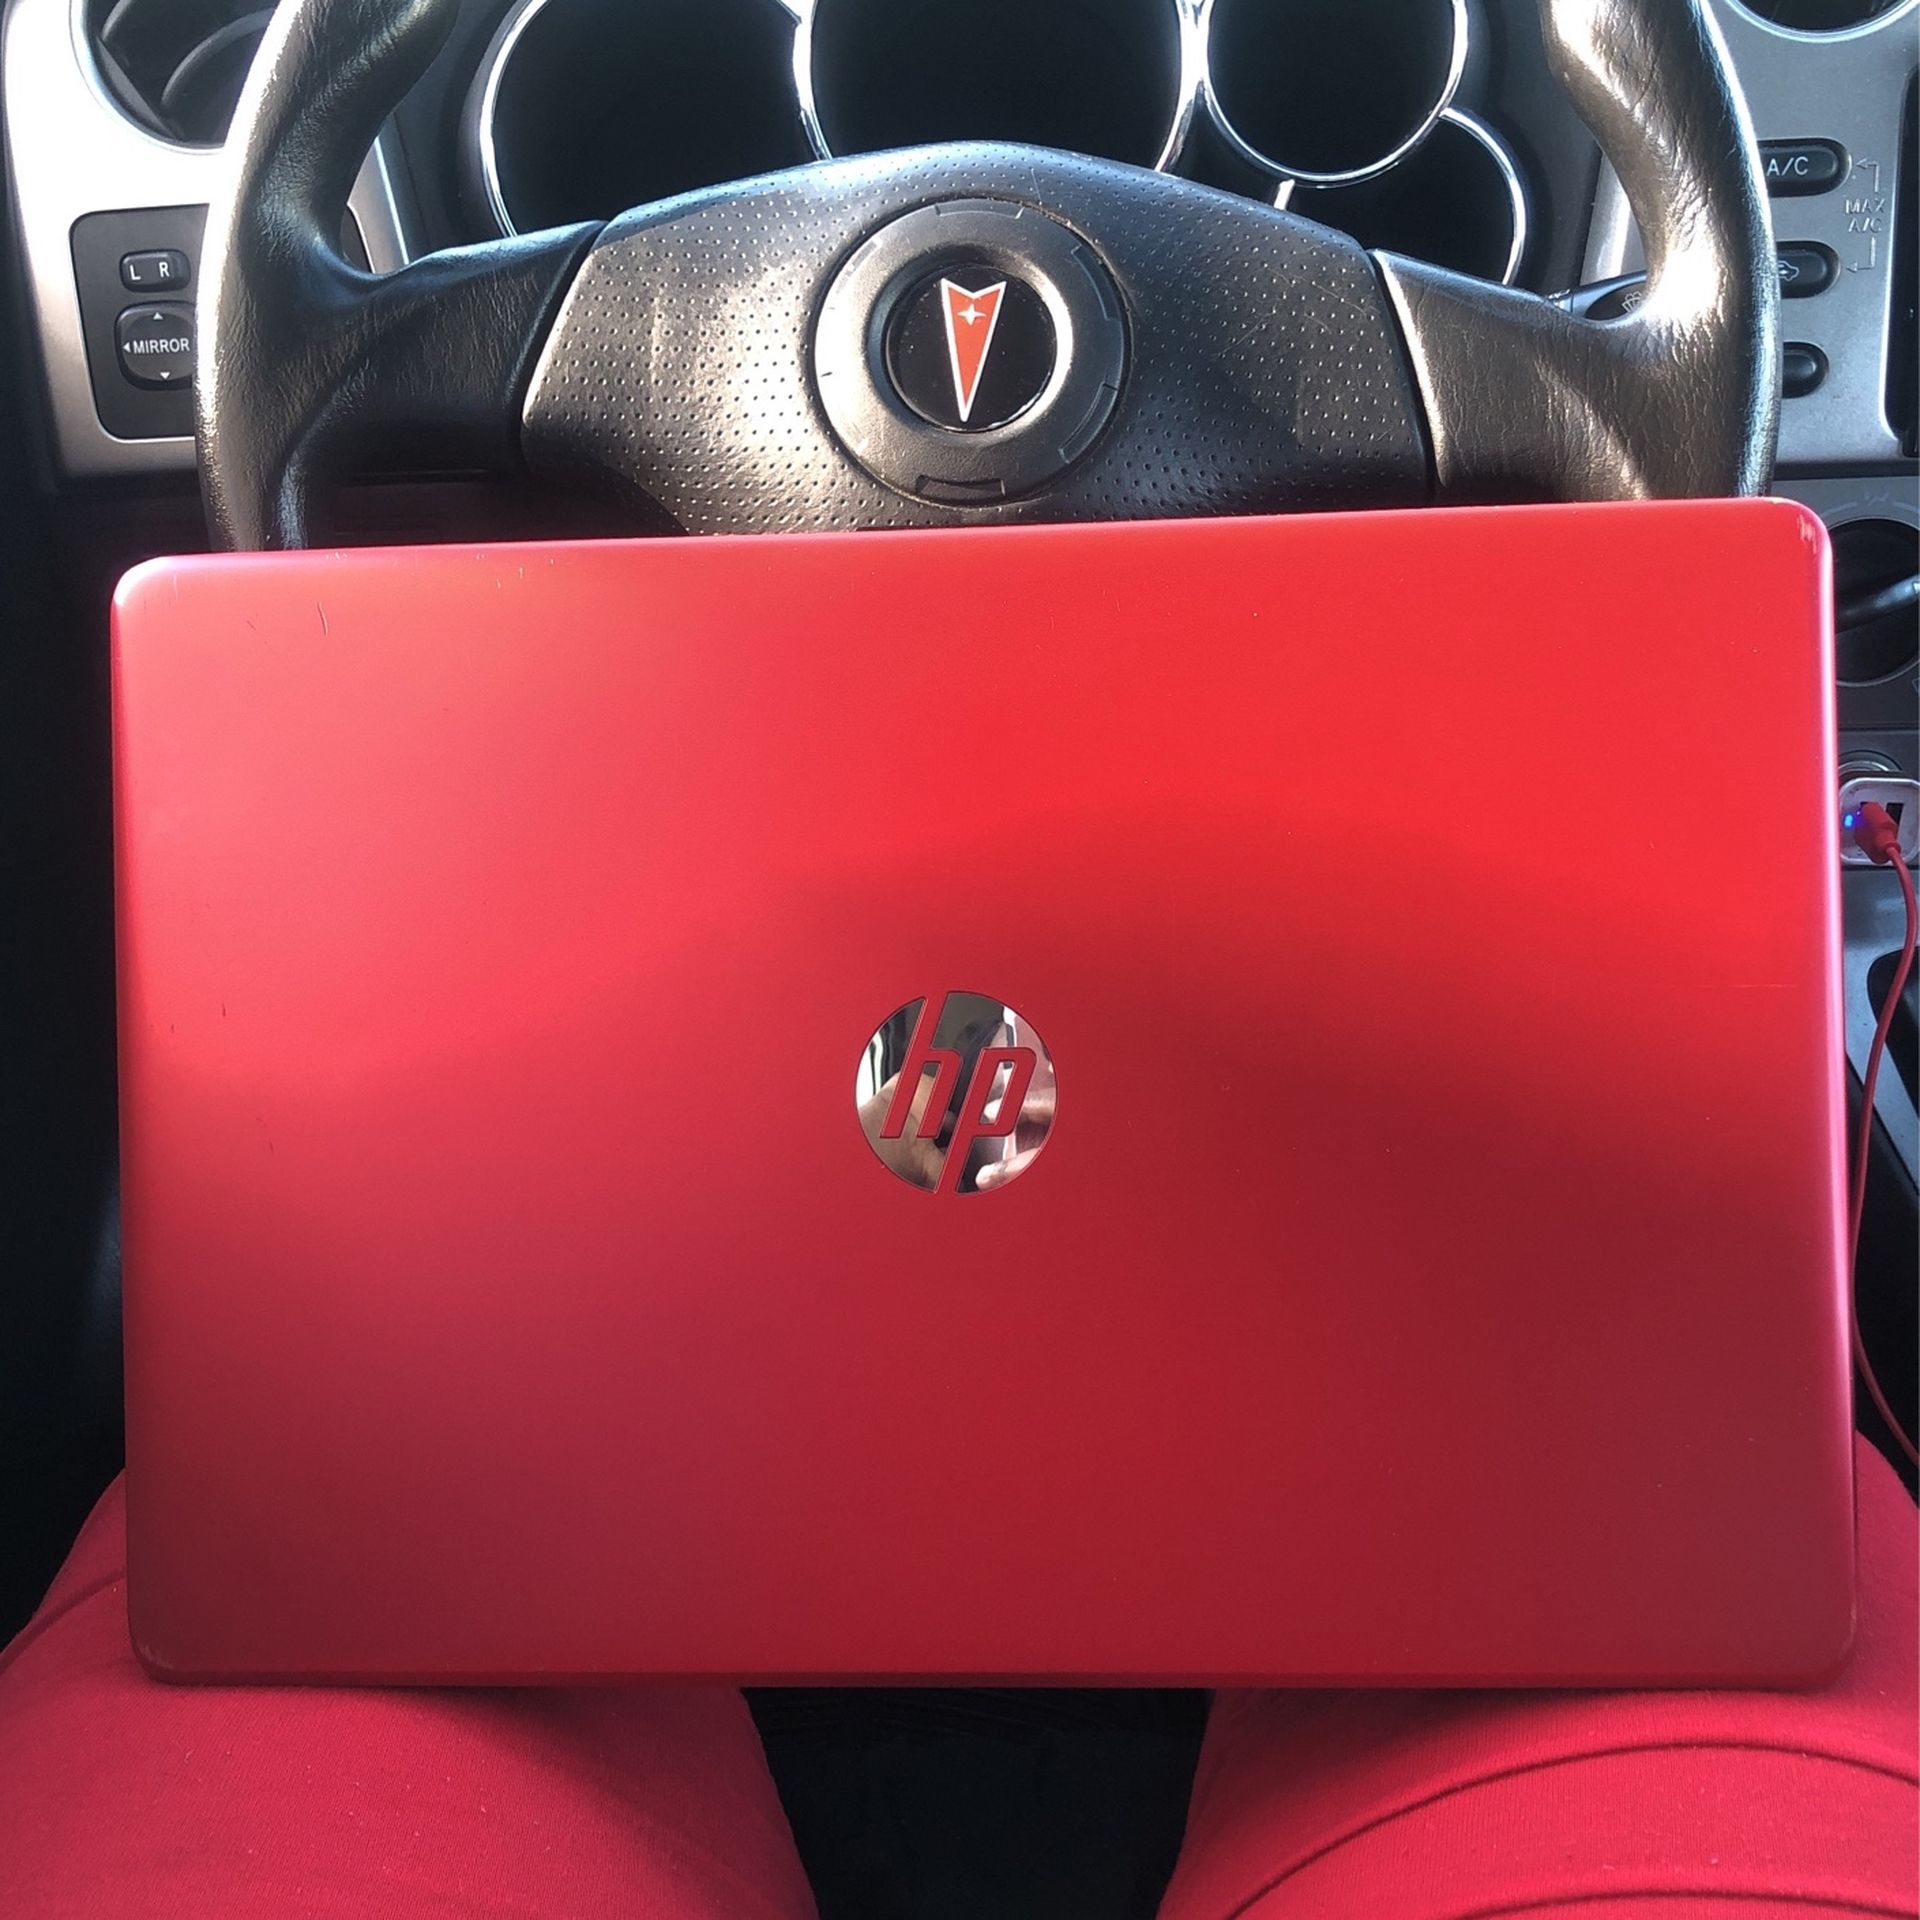 HP Laptop 15.6”